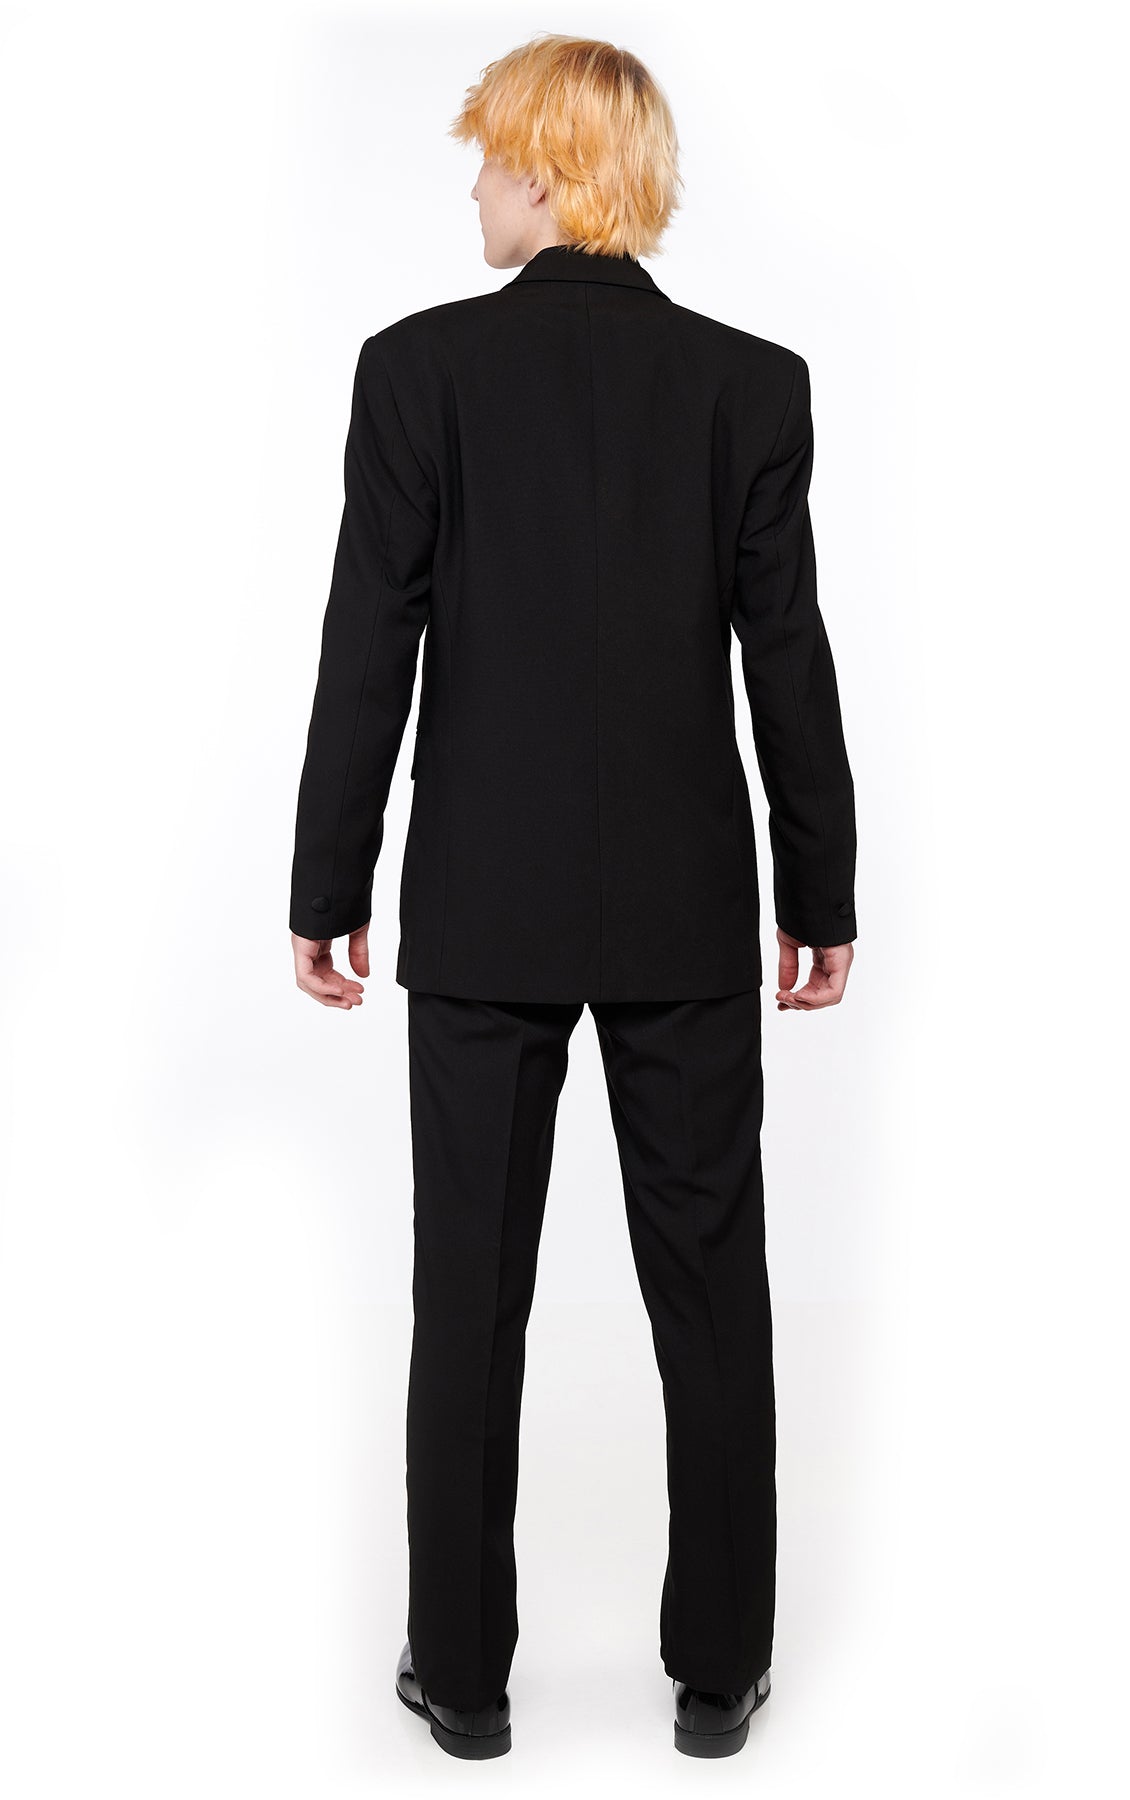 JOSHUA (Style #3001) - Black Shirt Tuxedo Package